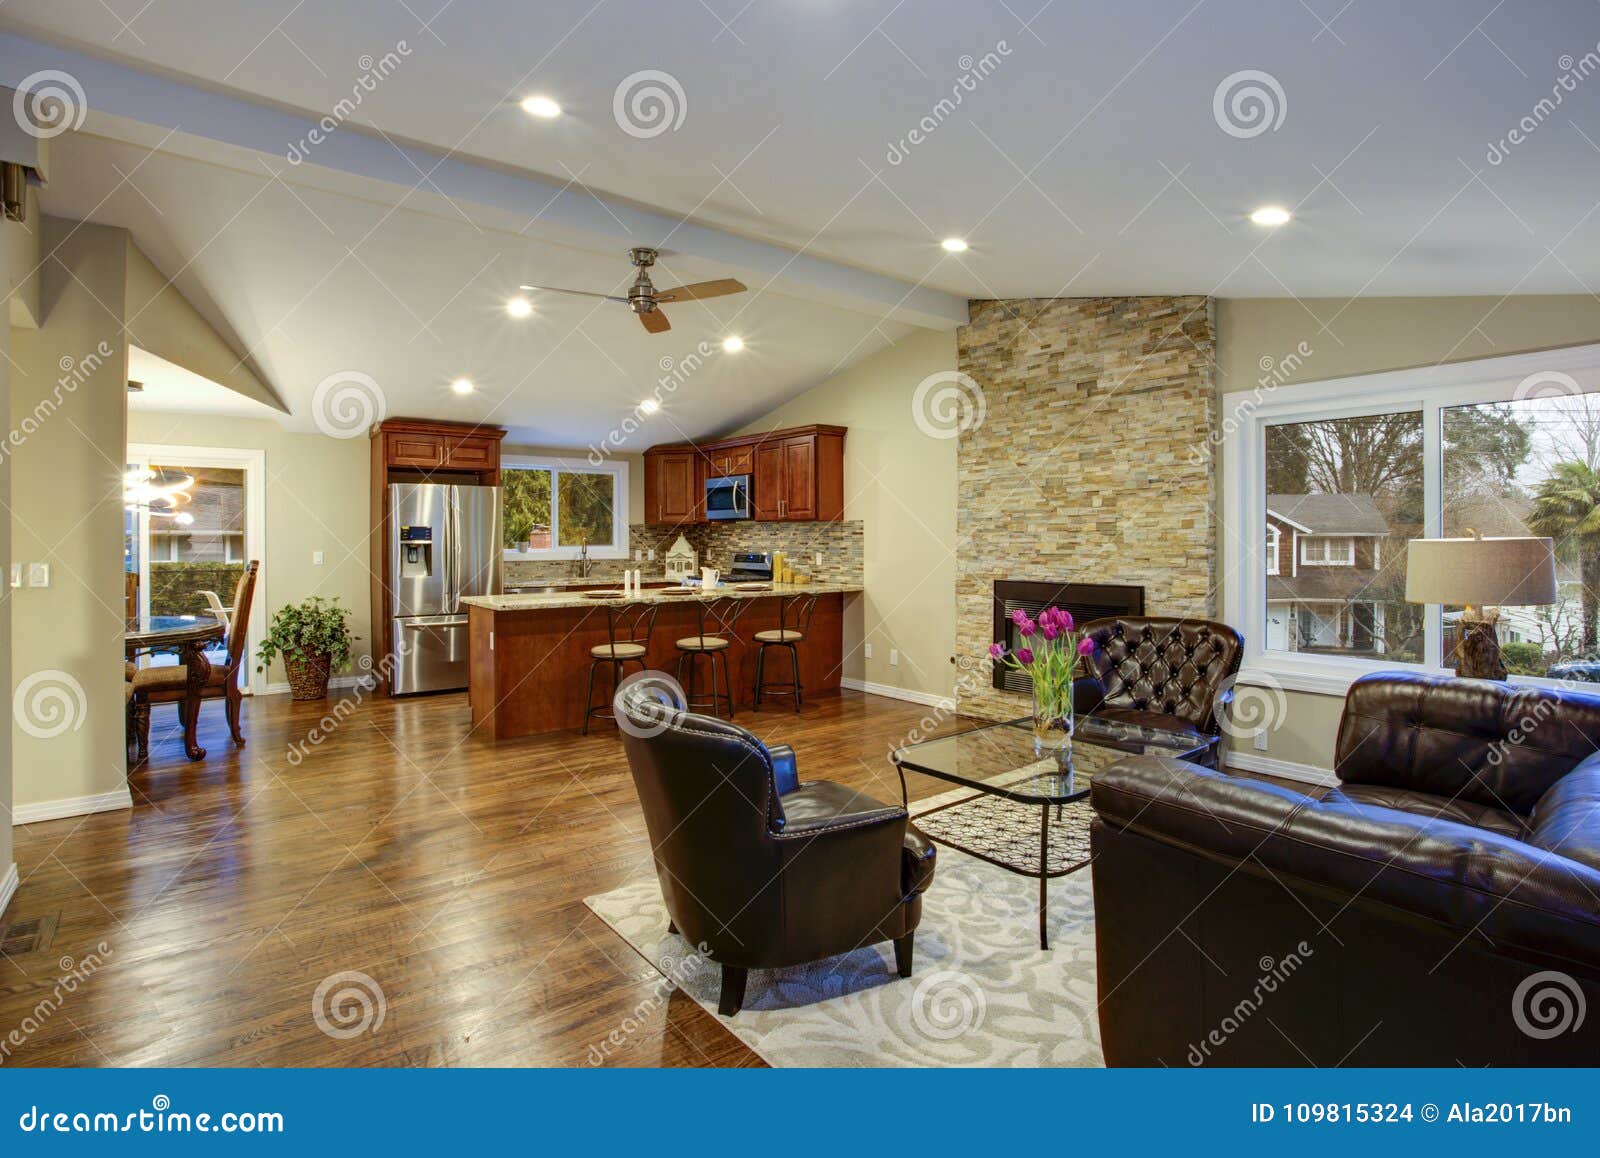 Luxury Great Room Design With Open Floor Plan Stock Photo Image